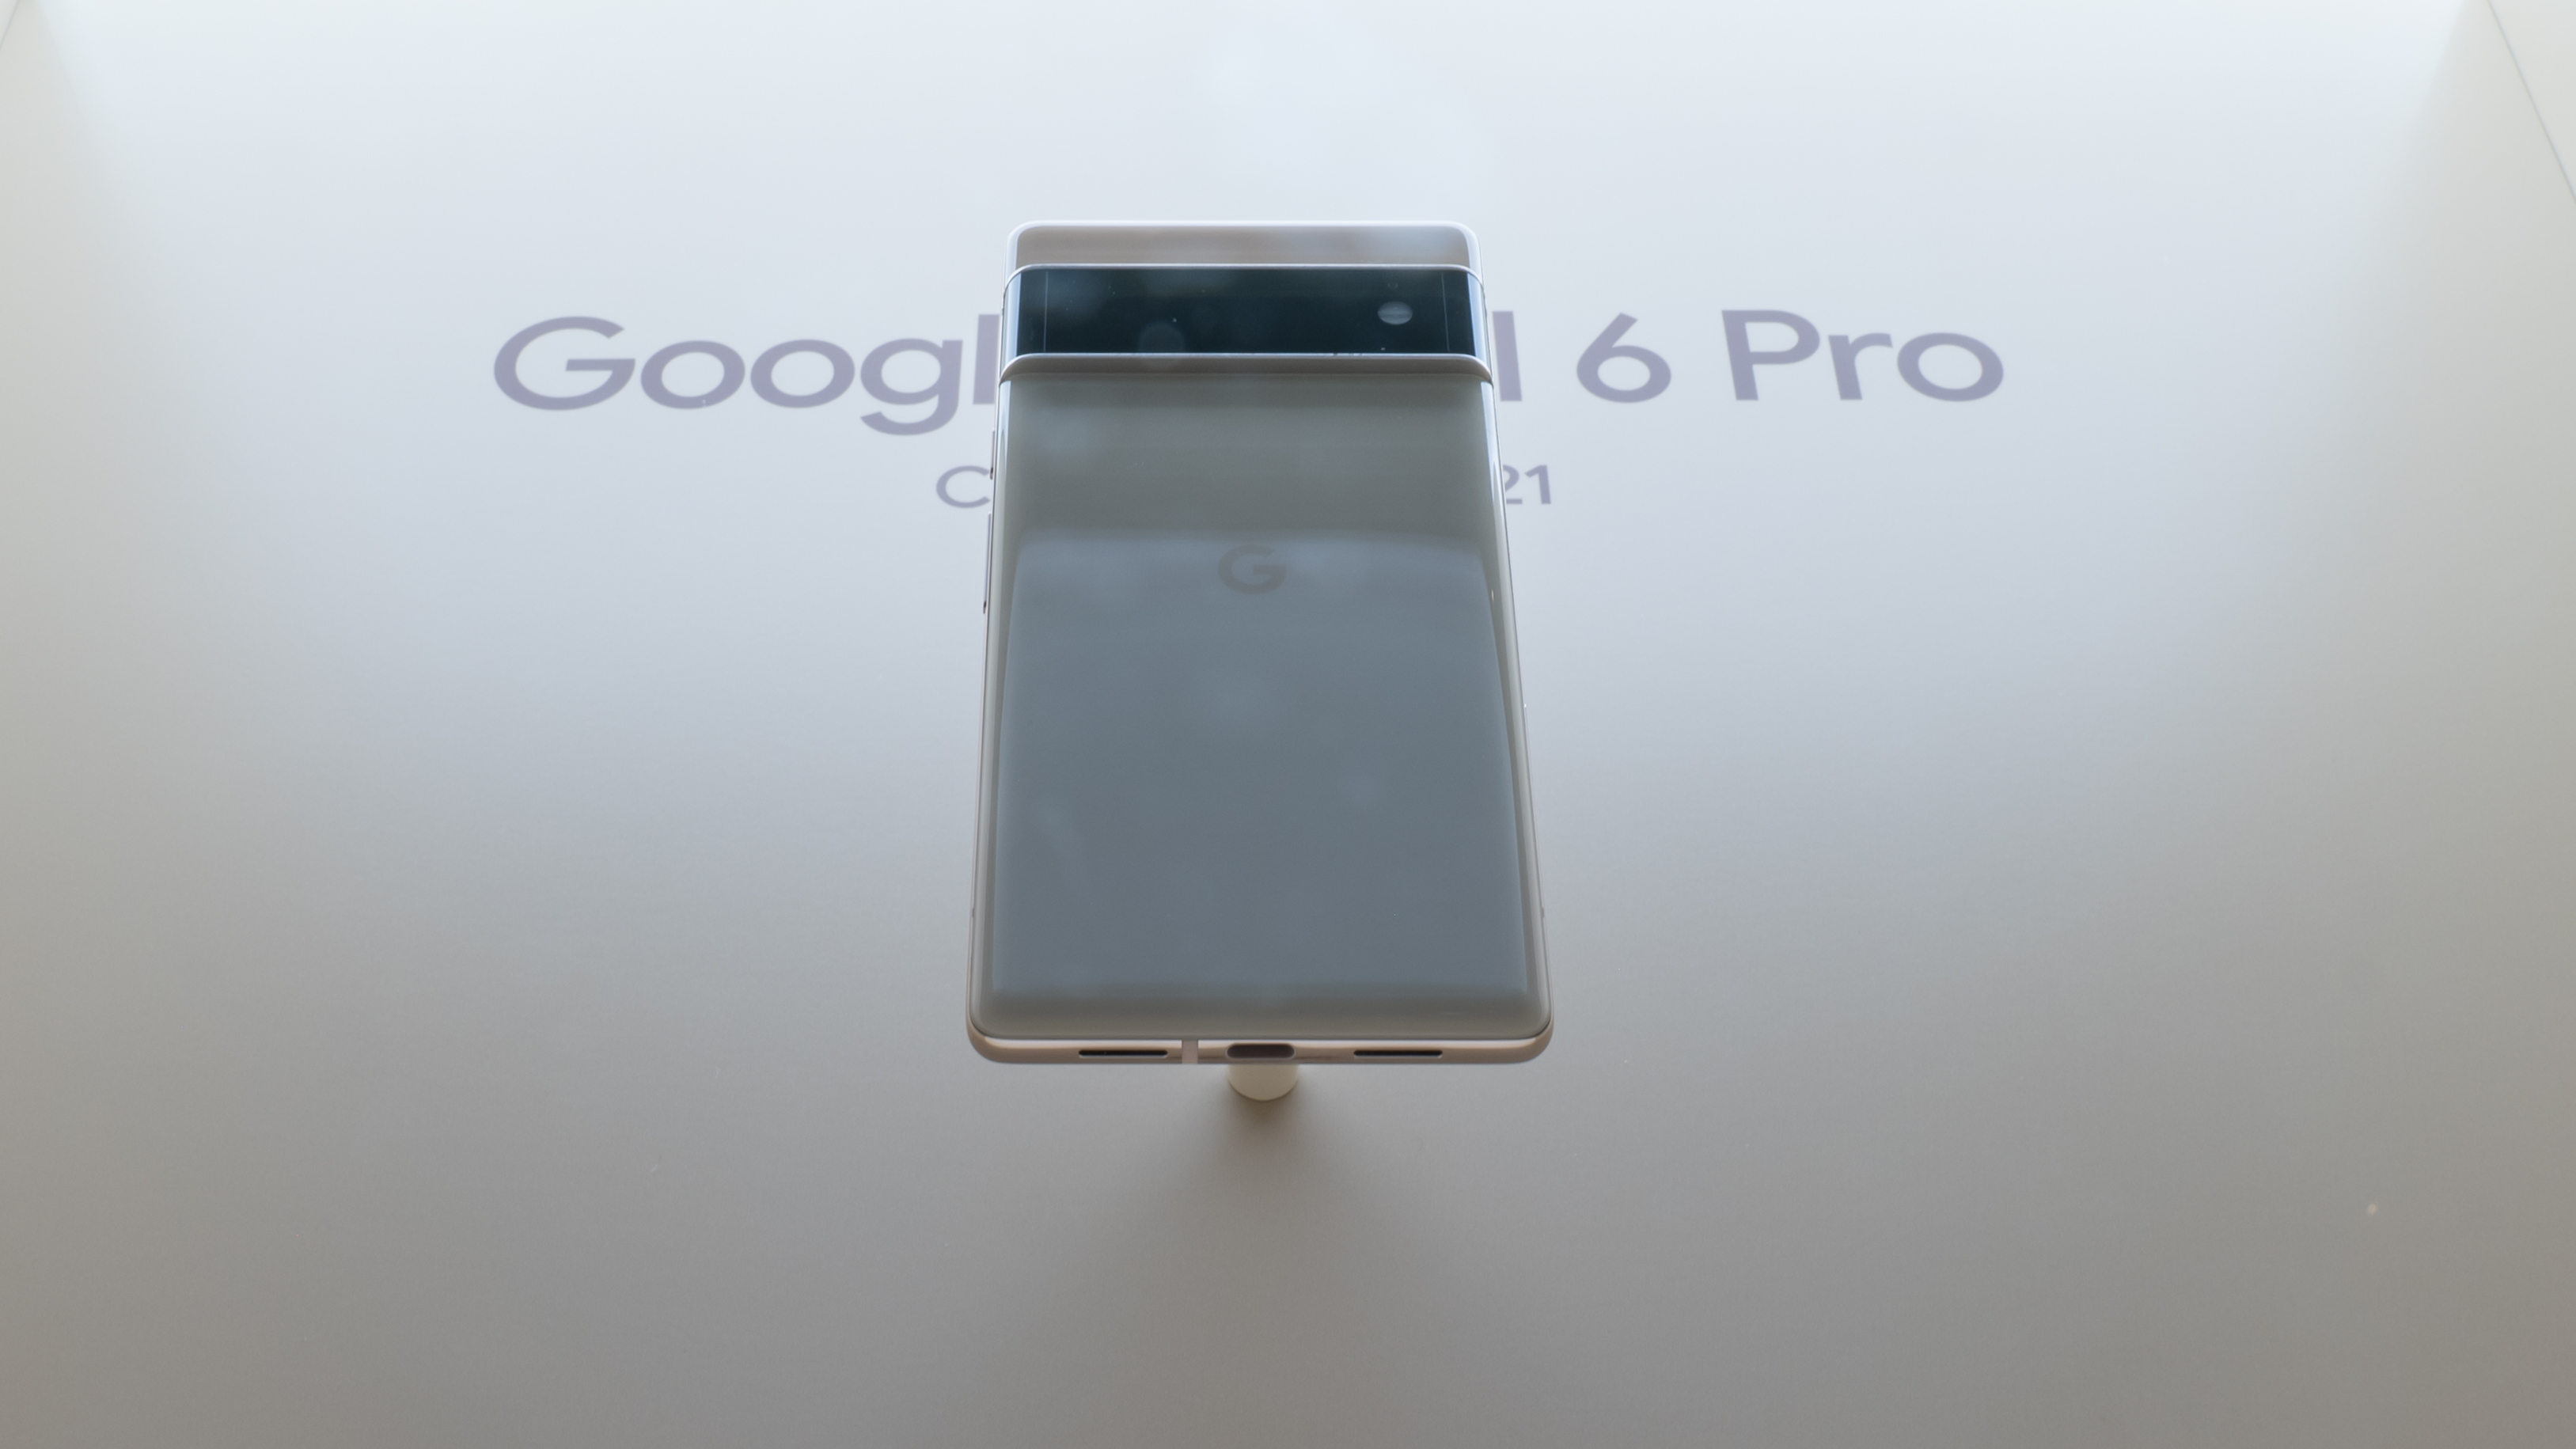 Google Pixel 6 phones on display